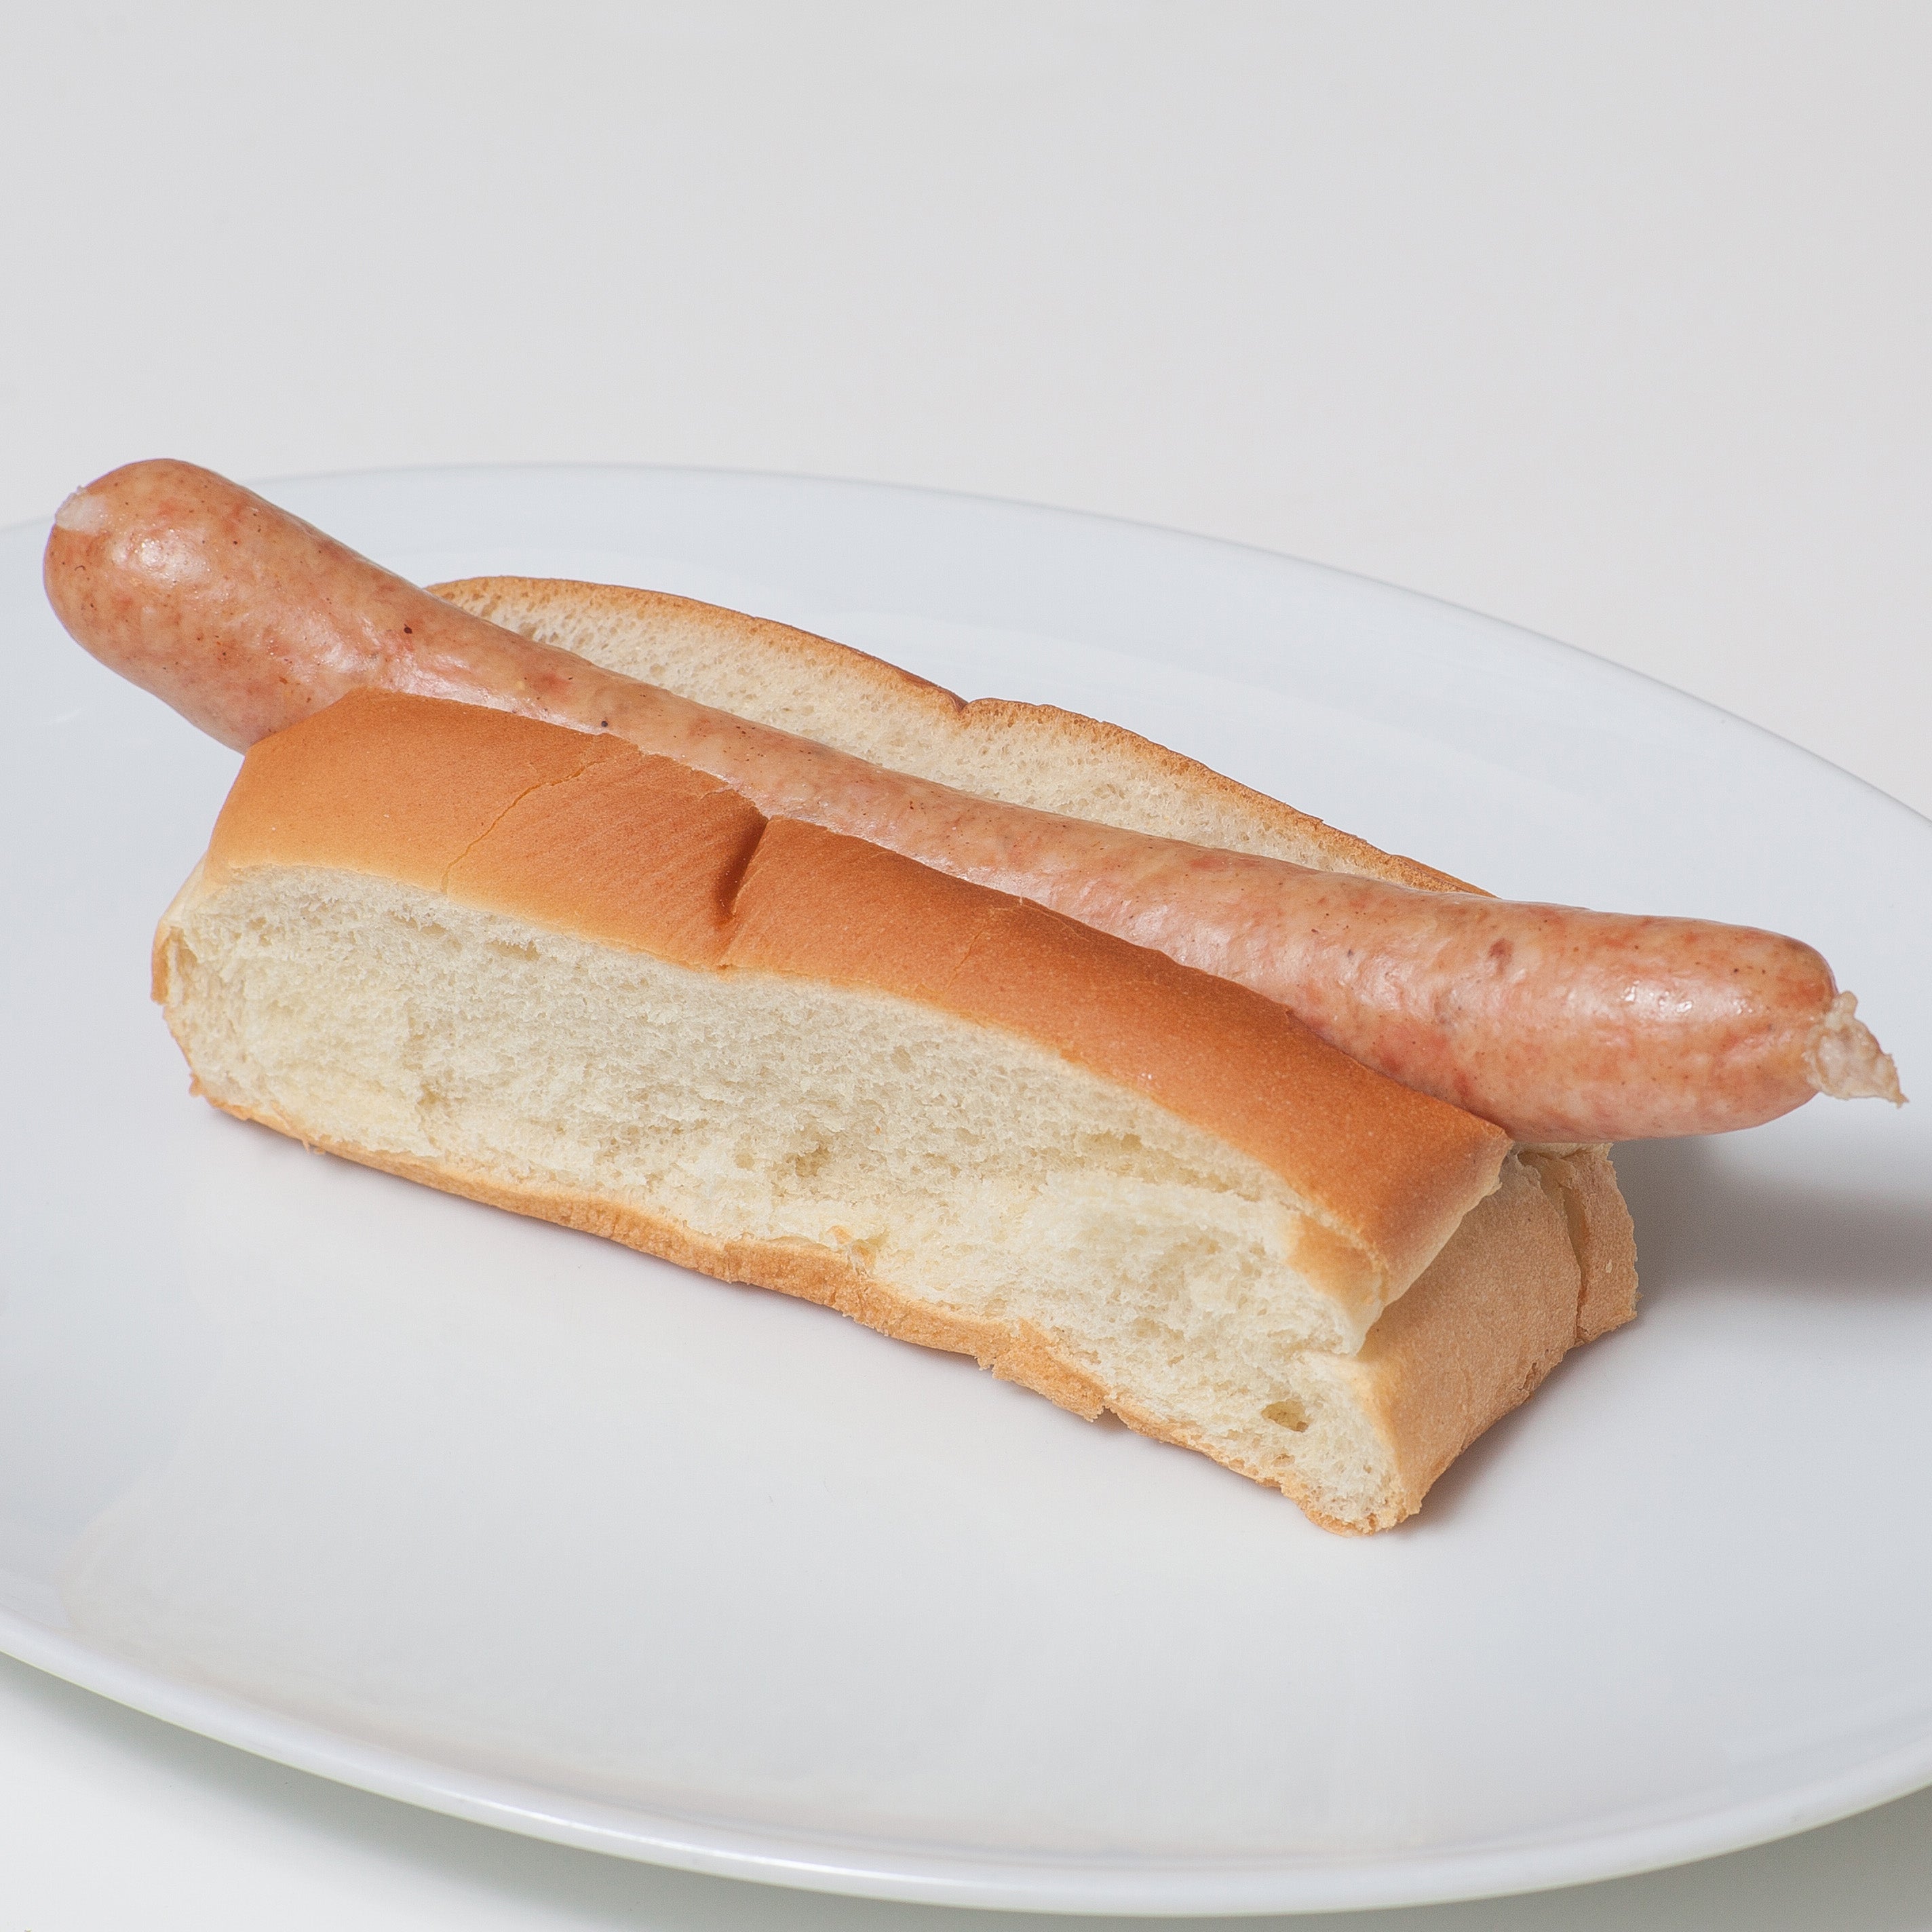 Hot Dogs de boeuf - Sauvegarde